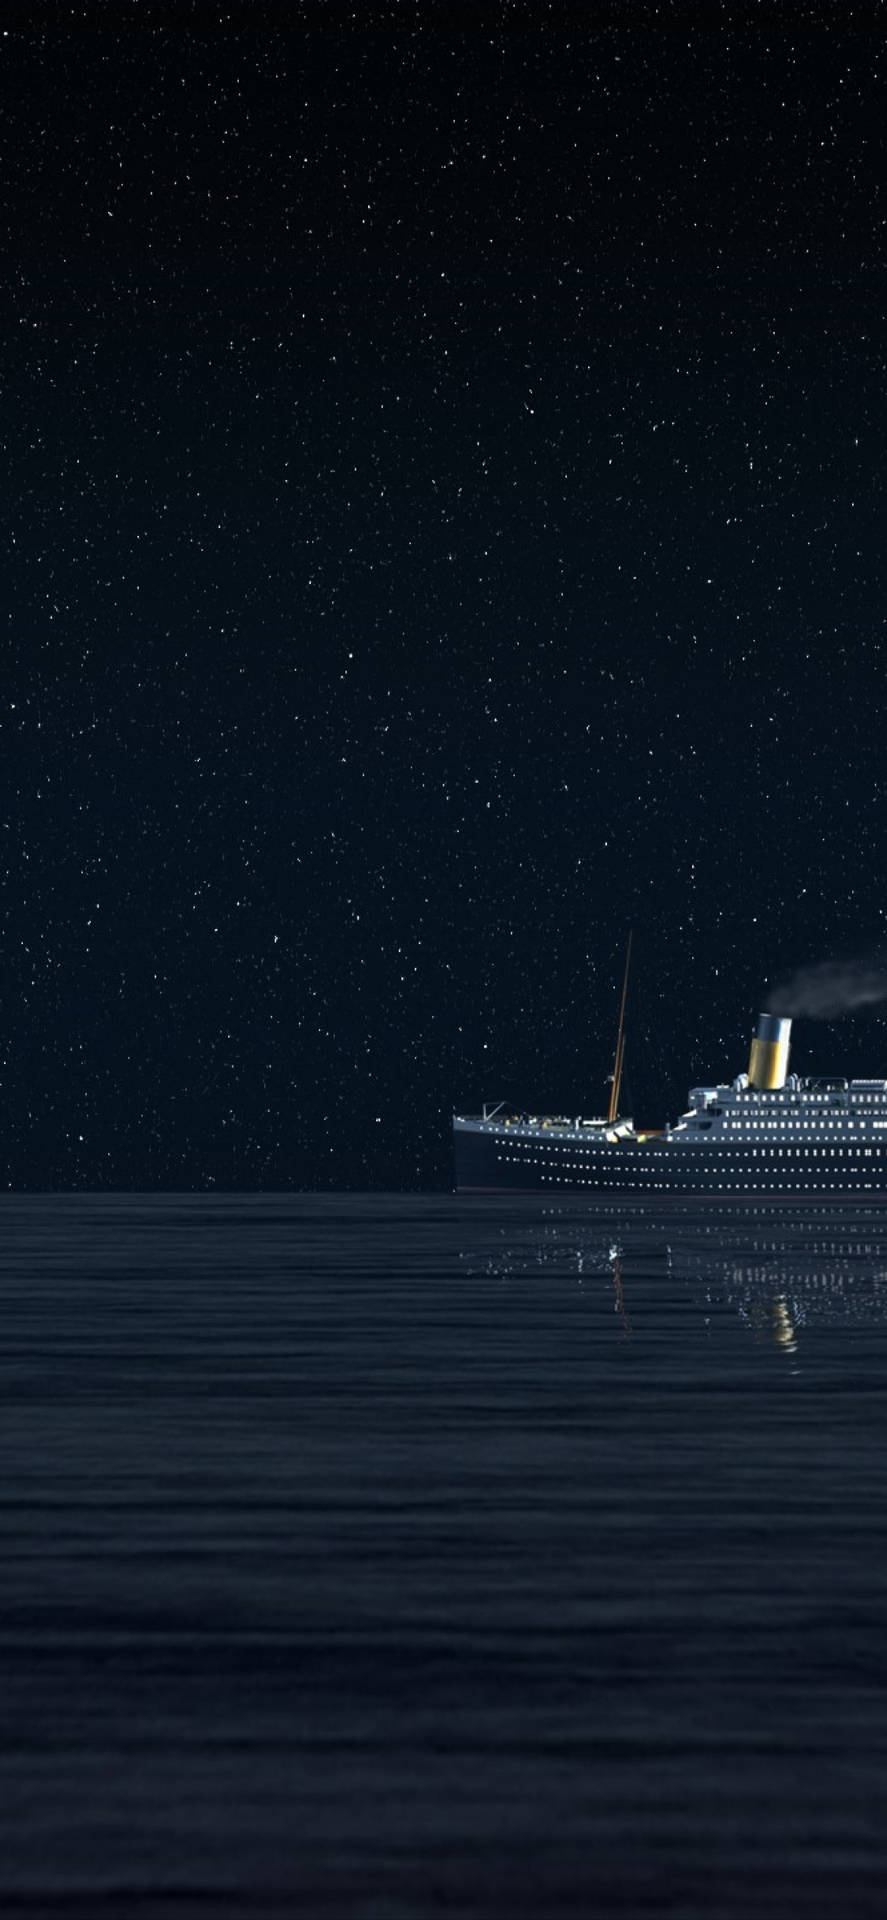 Titanic Starry Night Background